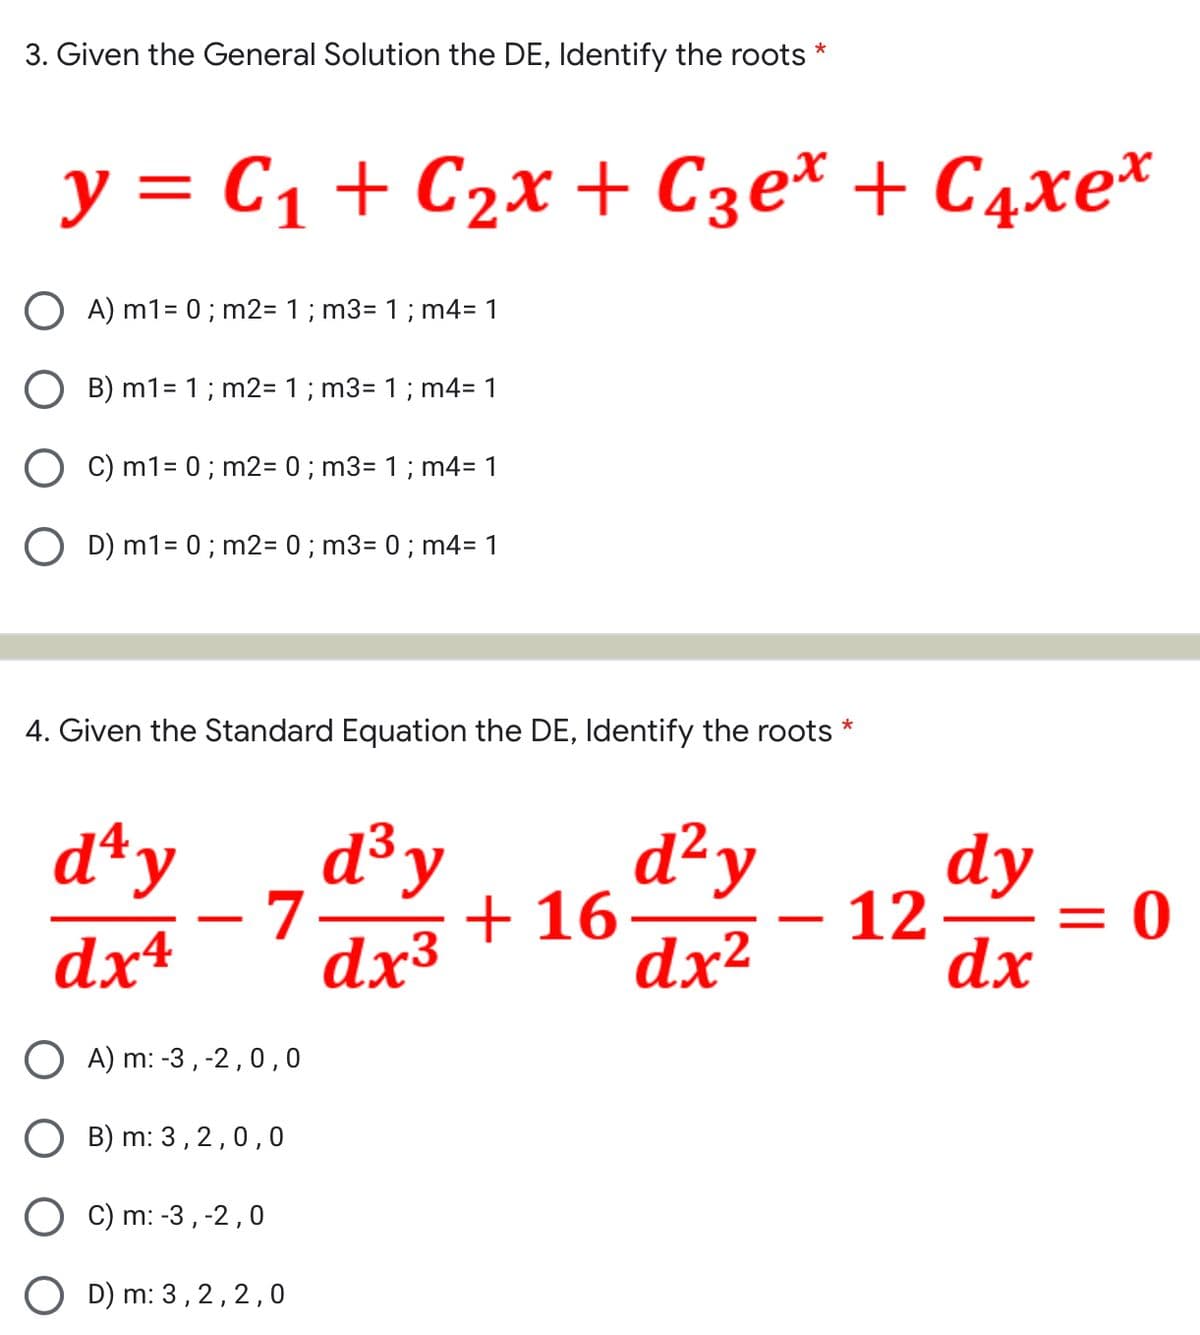 3. Given the General Solution the DE, Identify the roots
*
y = C₁ + C₂x + С3еx + С4xe*
OA) m1 = 0; m2= 1 ; m3= 1 ; m4= 1
O B) m1 = 1; m2= 1 ; m3= 1 ; m4= 1
C) m1 = 0; m2= 0; m3= 1 ; m4= 1
D) m1 = 0; m2= 0; m3= 0 ; m4= 1
4. Given the Standard Equation the DE, Identify the roots *
d³ y
d²y
day
dx4
4-70+
dx³
dx²
A) m: -3, -2,0,0
B) m: 3,2,0,0
C) m: -3, -2,0
D) m: 3, 2, 2, 0
+16
-
dy
dx
12 –
= 0